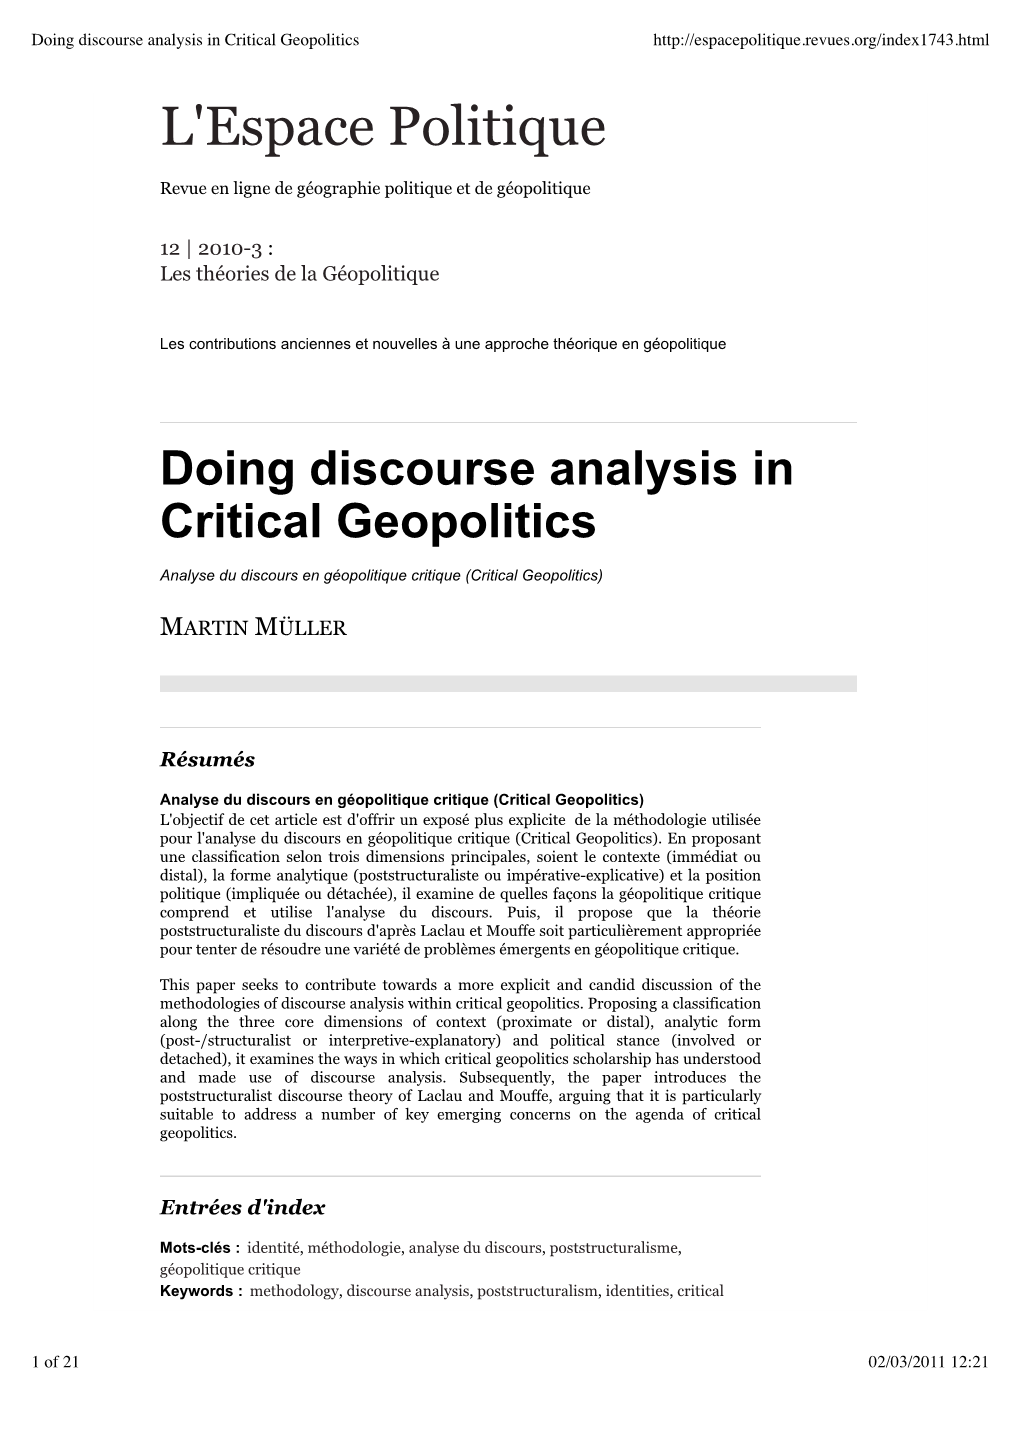 Doing Discourse Analysis in Critical Geopolitics L'espace Politique